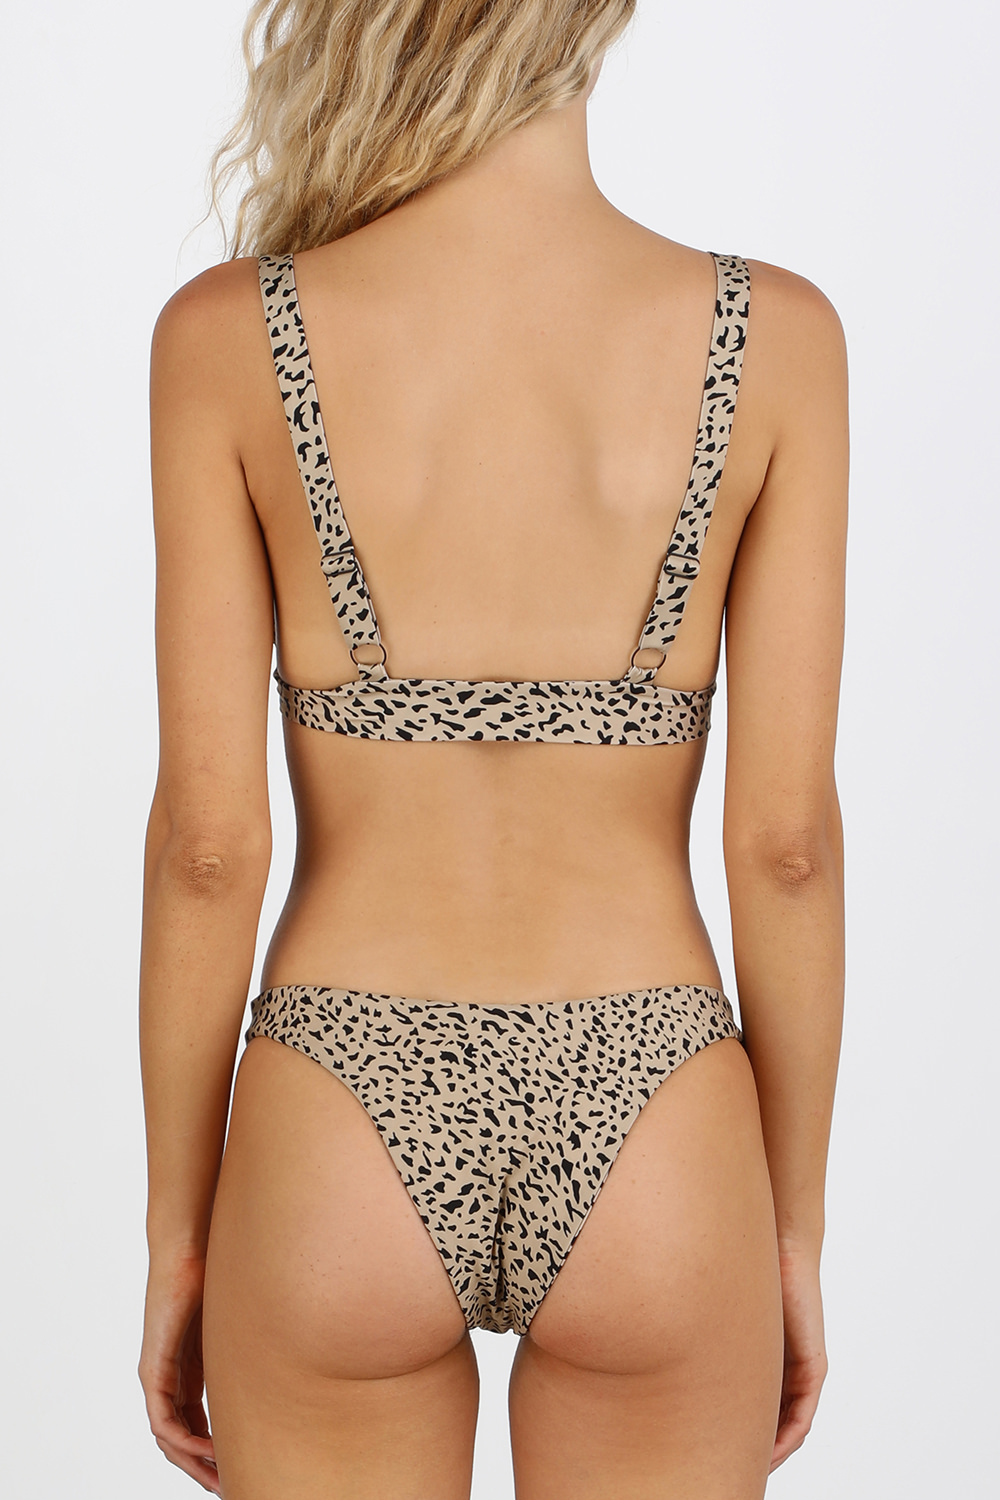 Ur An Animal Bikini Top in Leopard VOLCOM